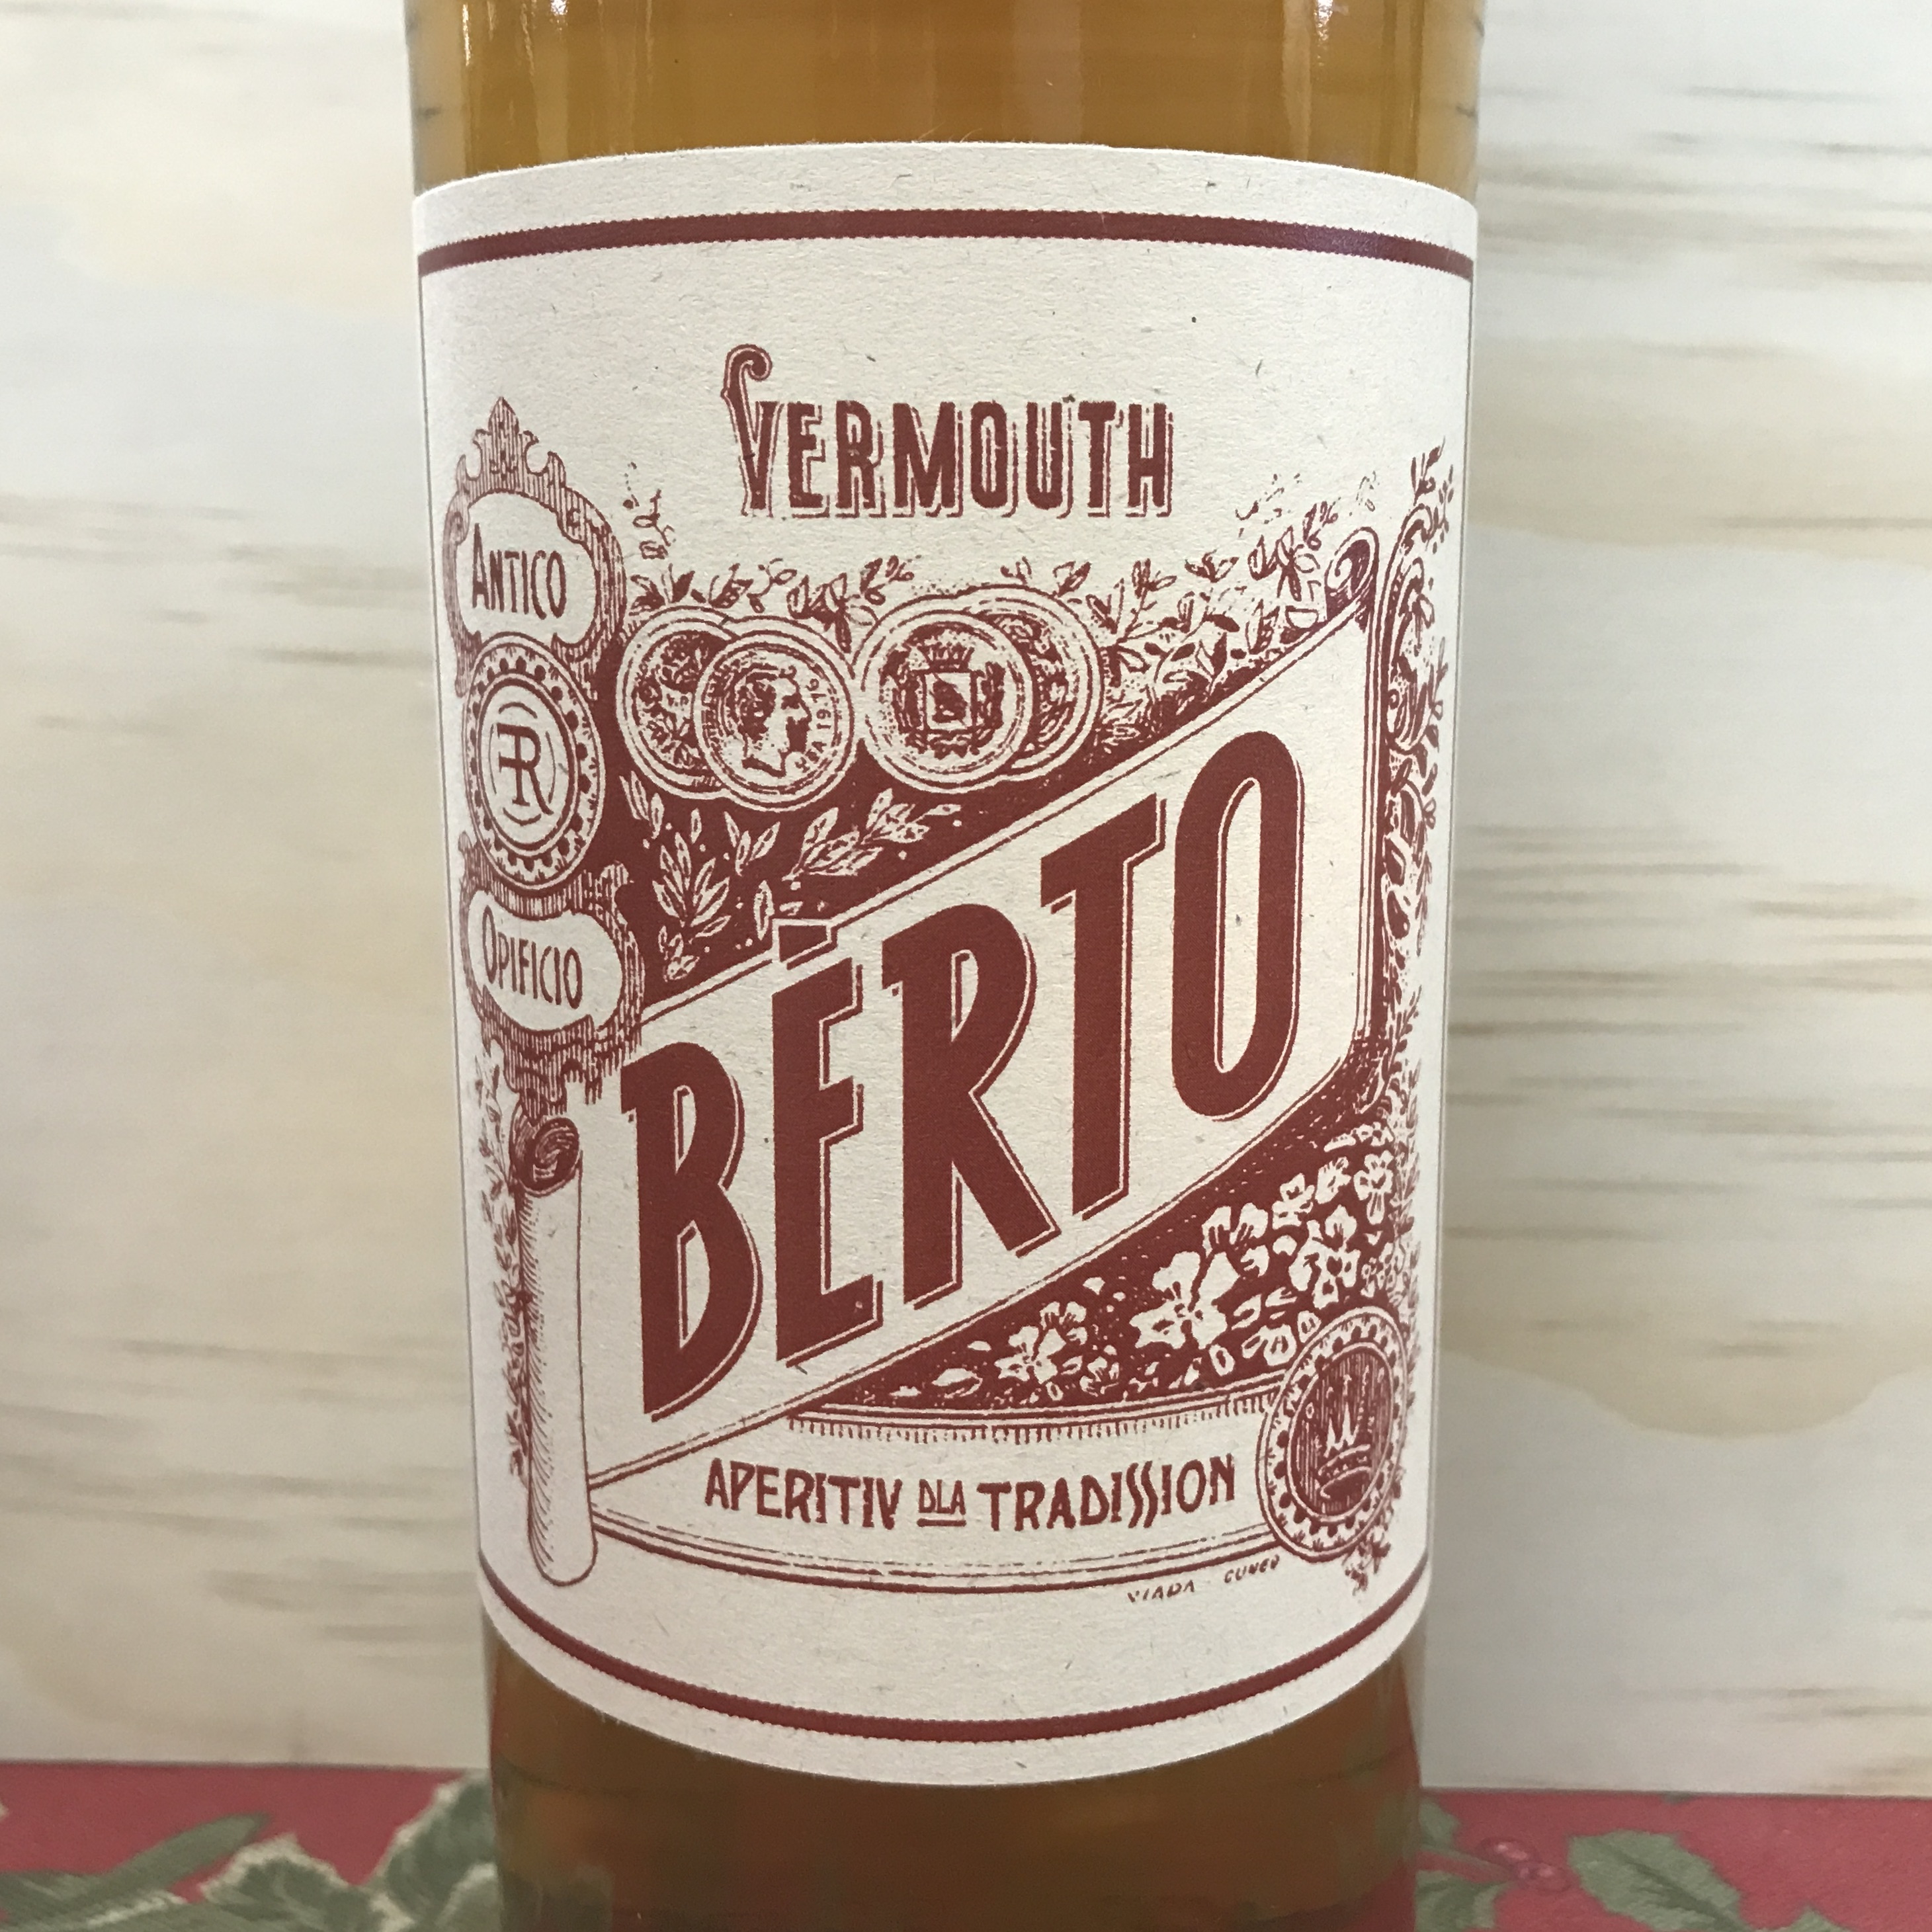 Berto Vermouth Apertiv dla Tradission (white)